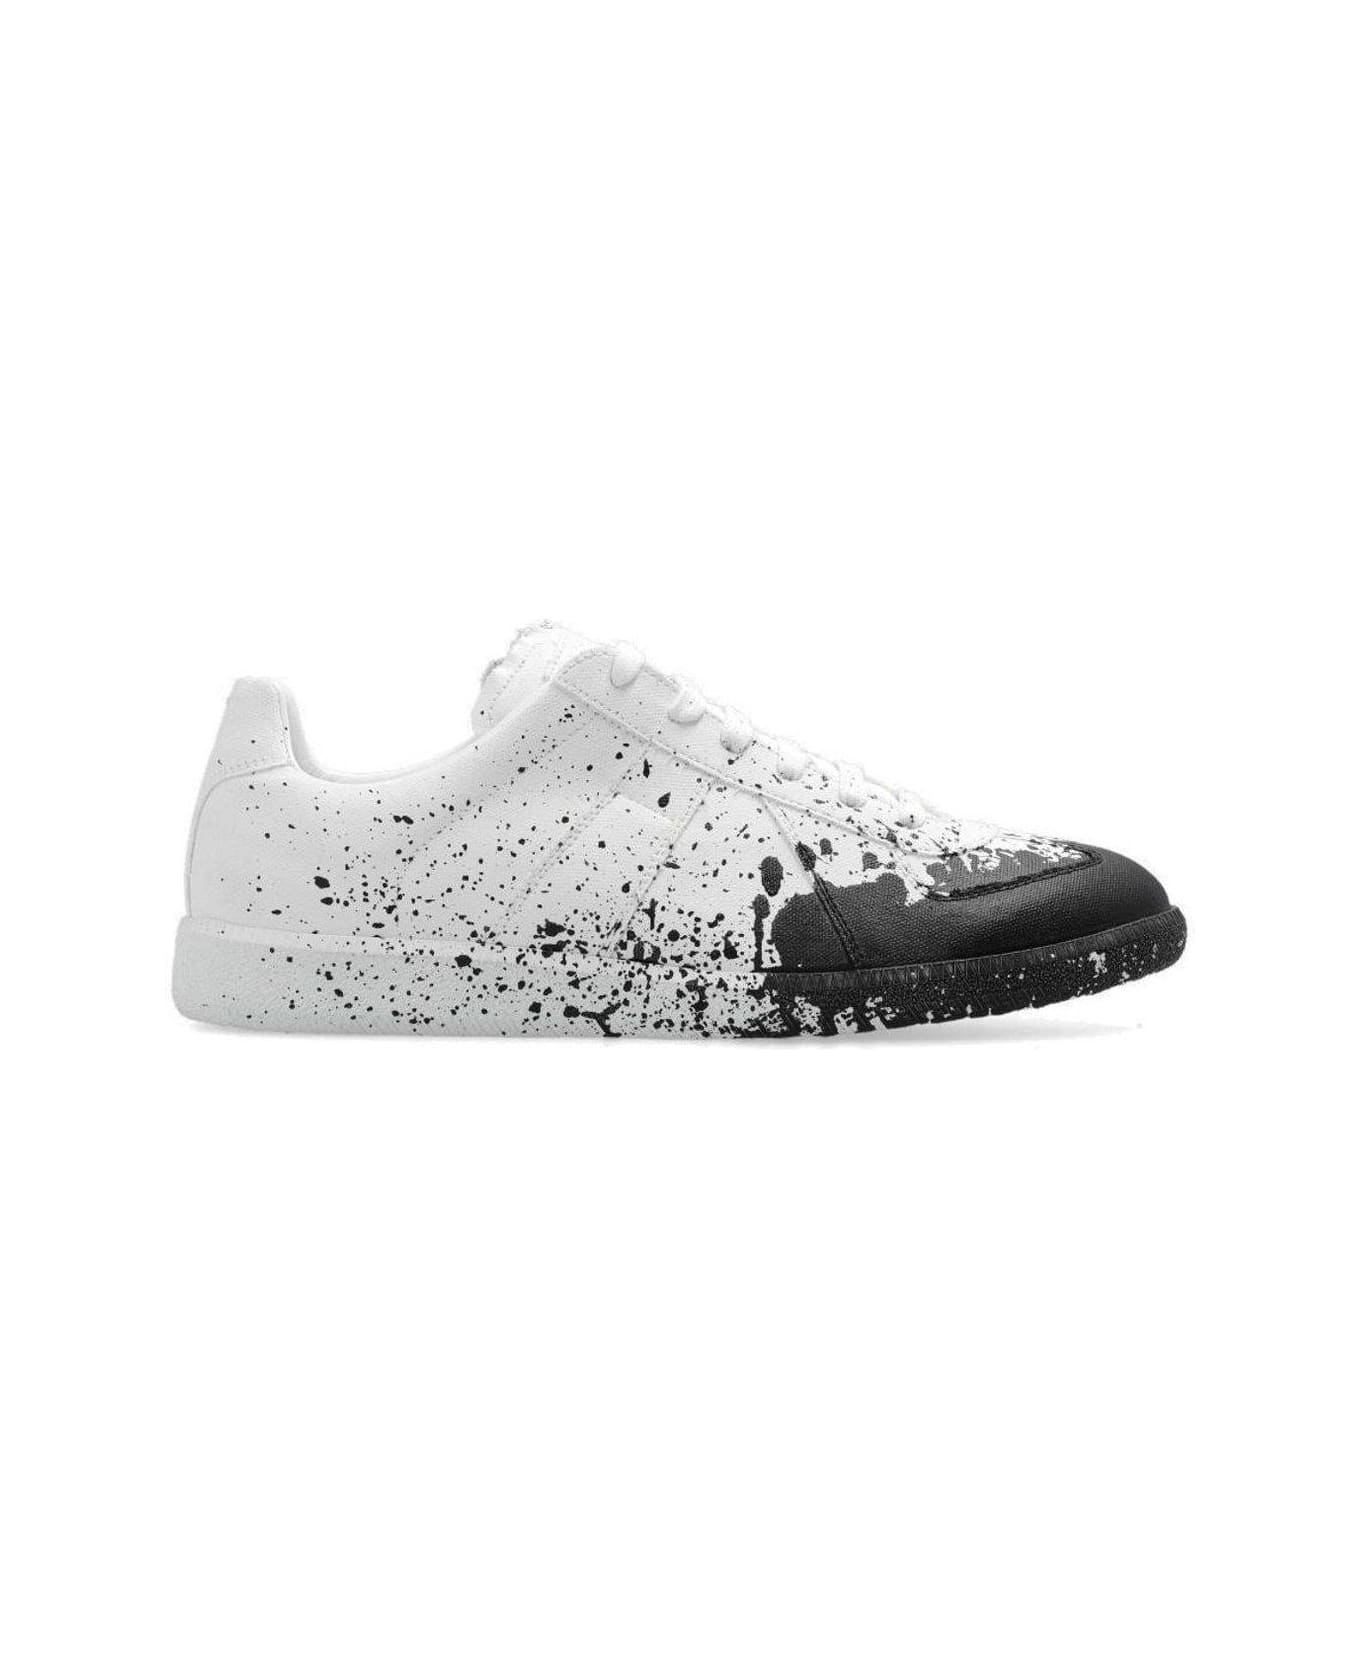 Maison Margiela Painter Replica Sneakers - White スニーカー